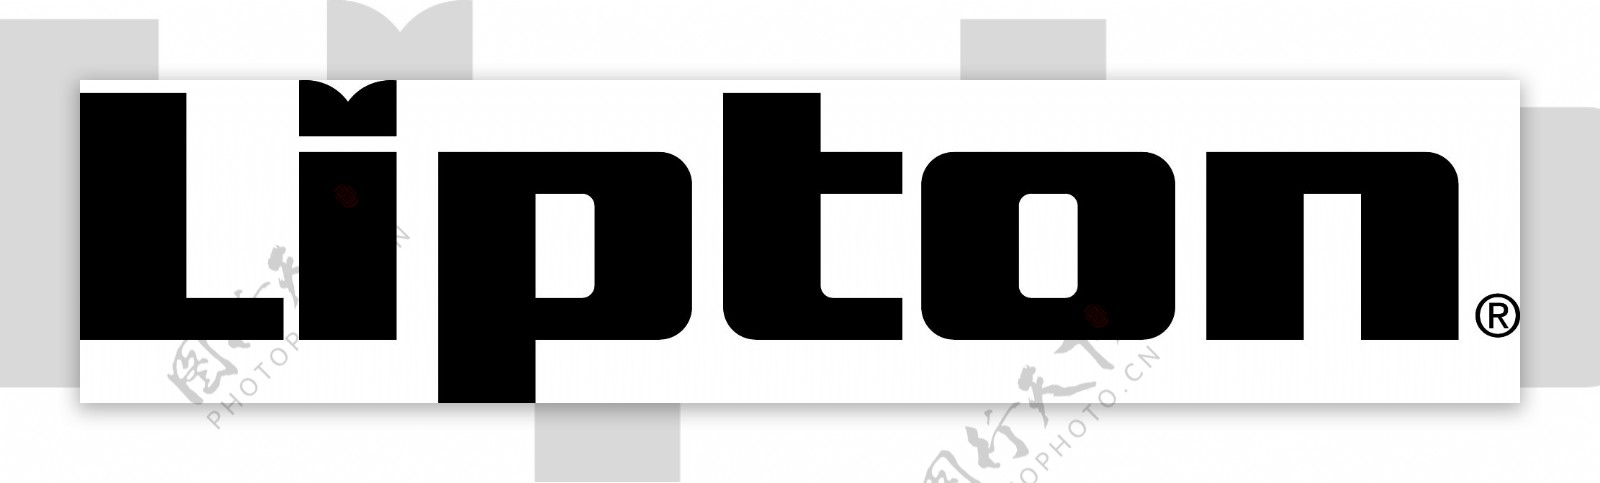 立顿logo2